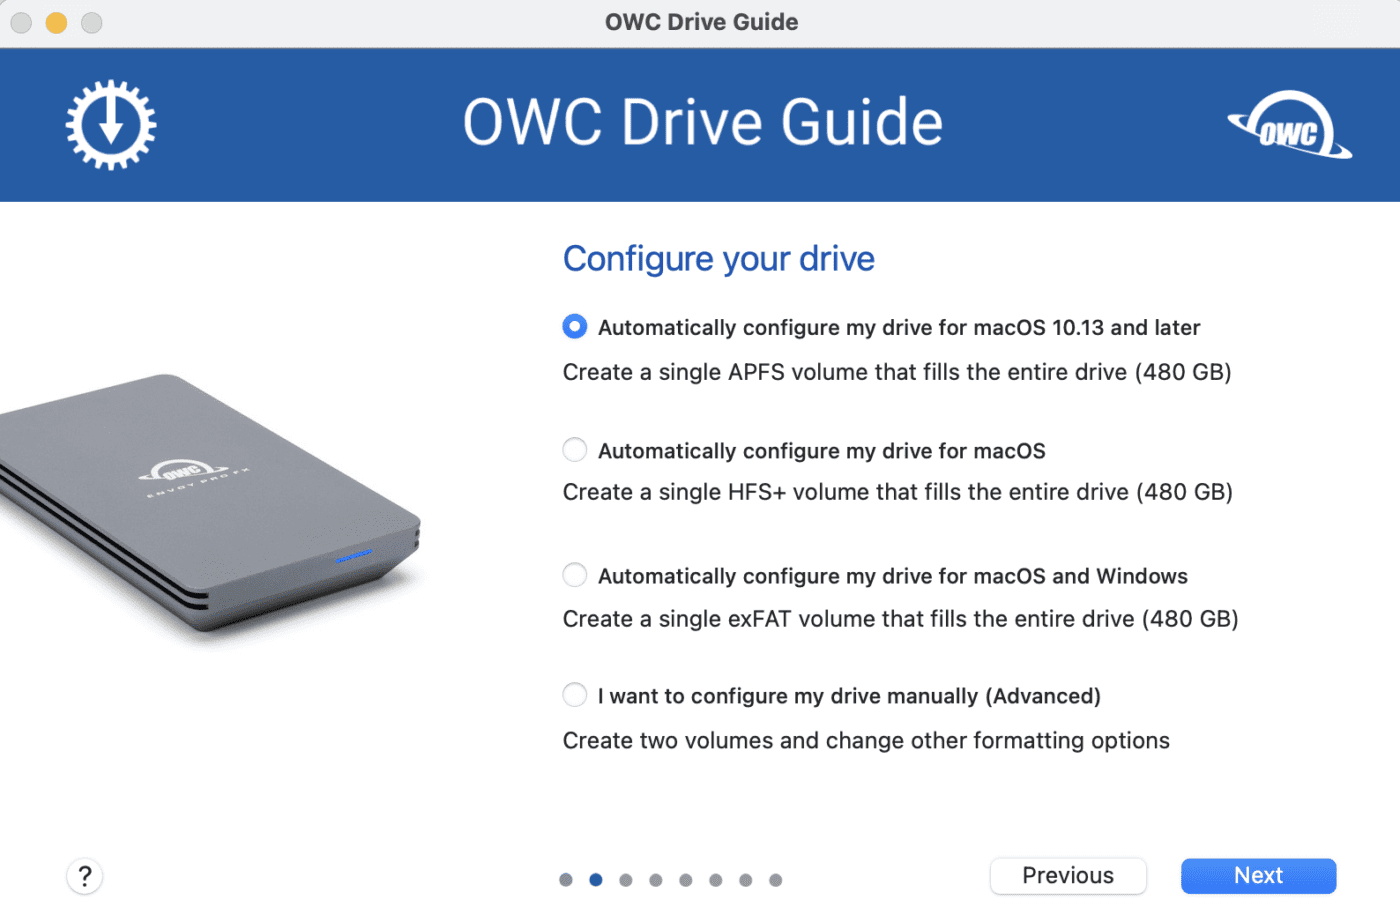 OWC Drive Guide walks users through drive setup